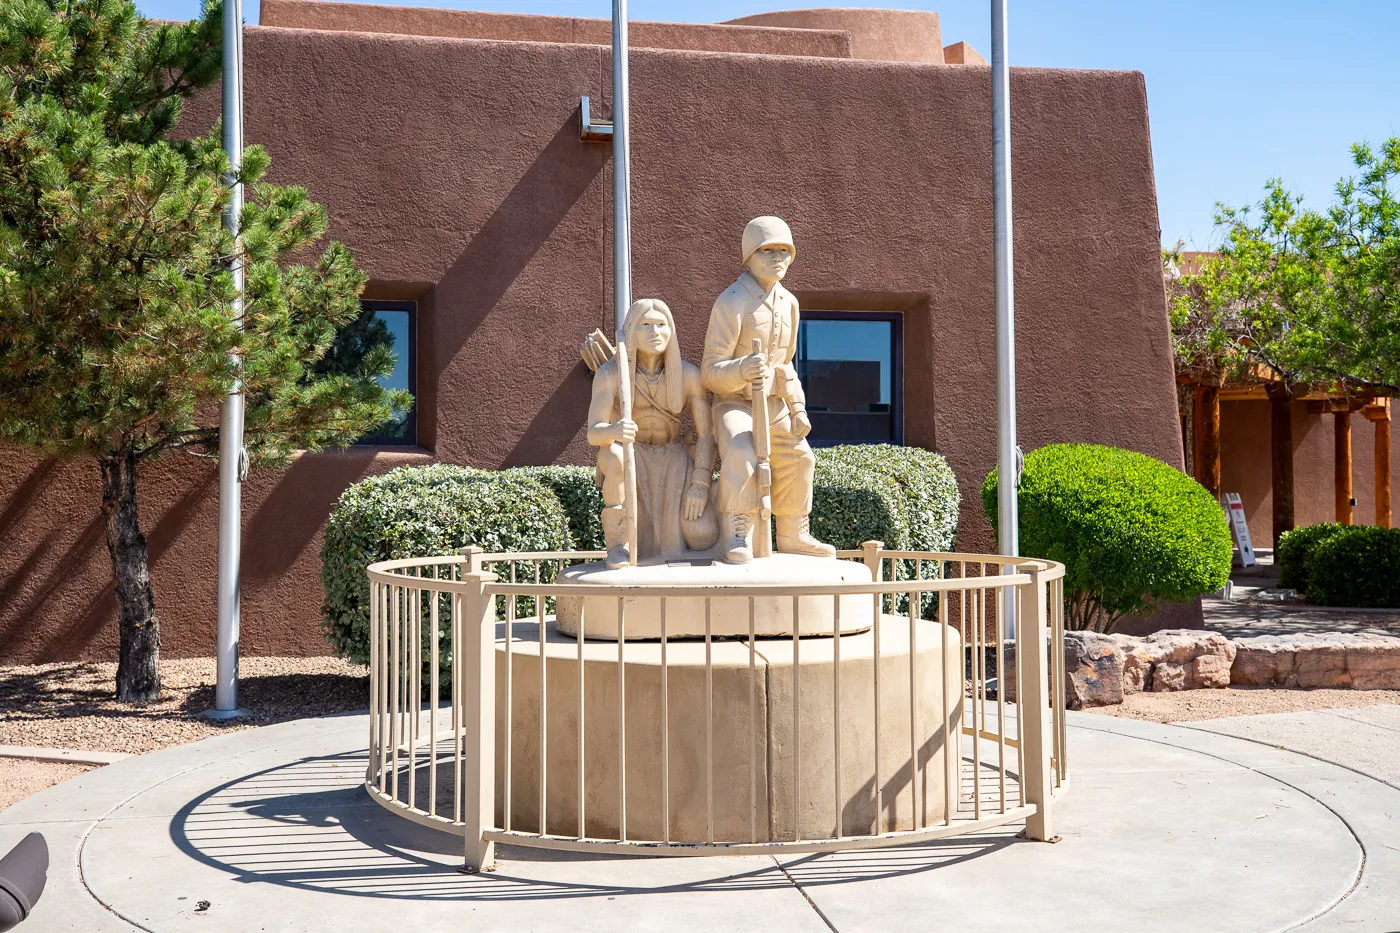 Indian Pueblo Cultural Center in Albuquerque, New Mexico